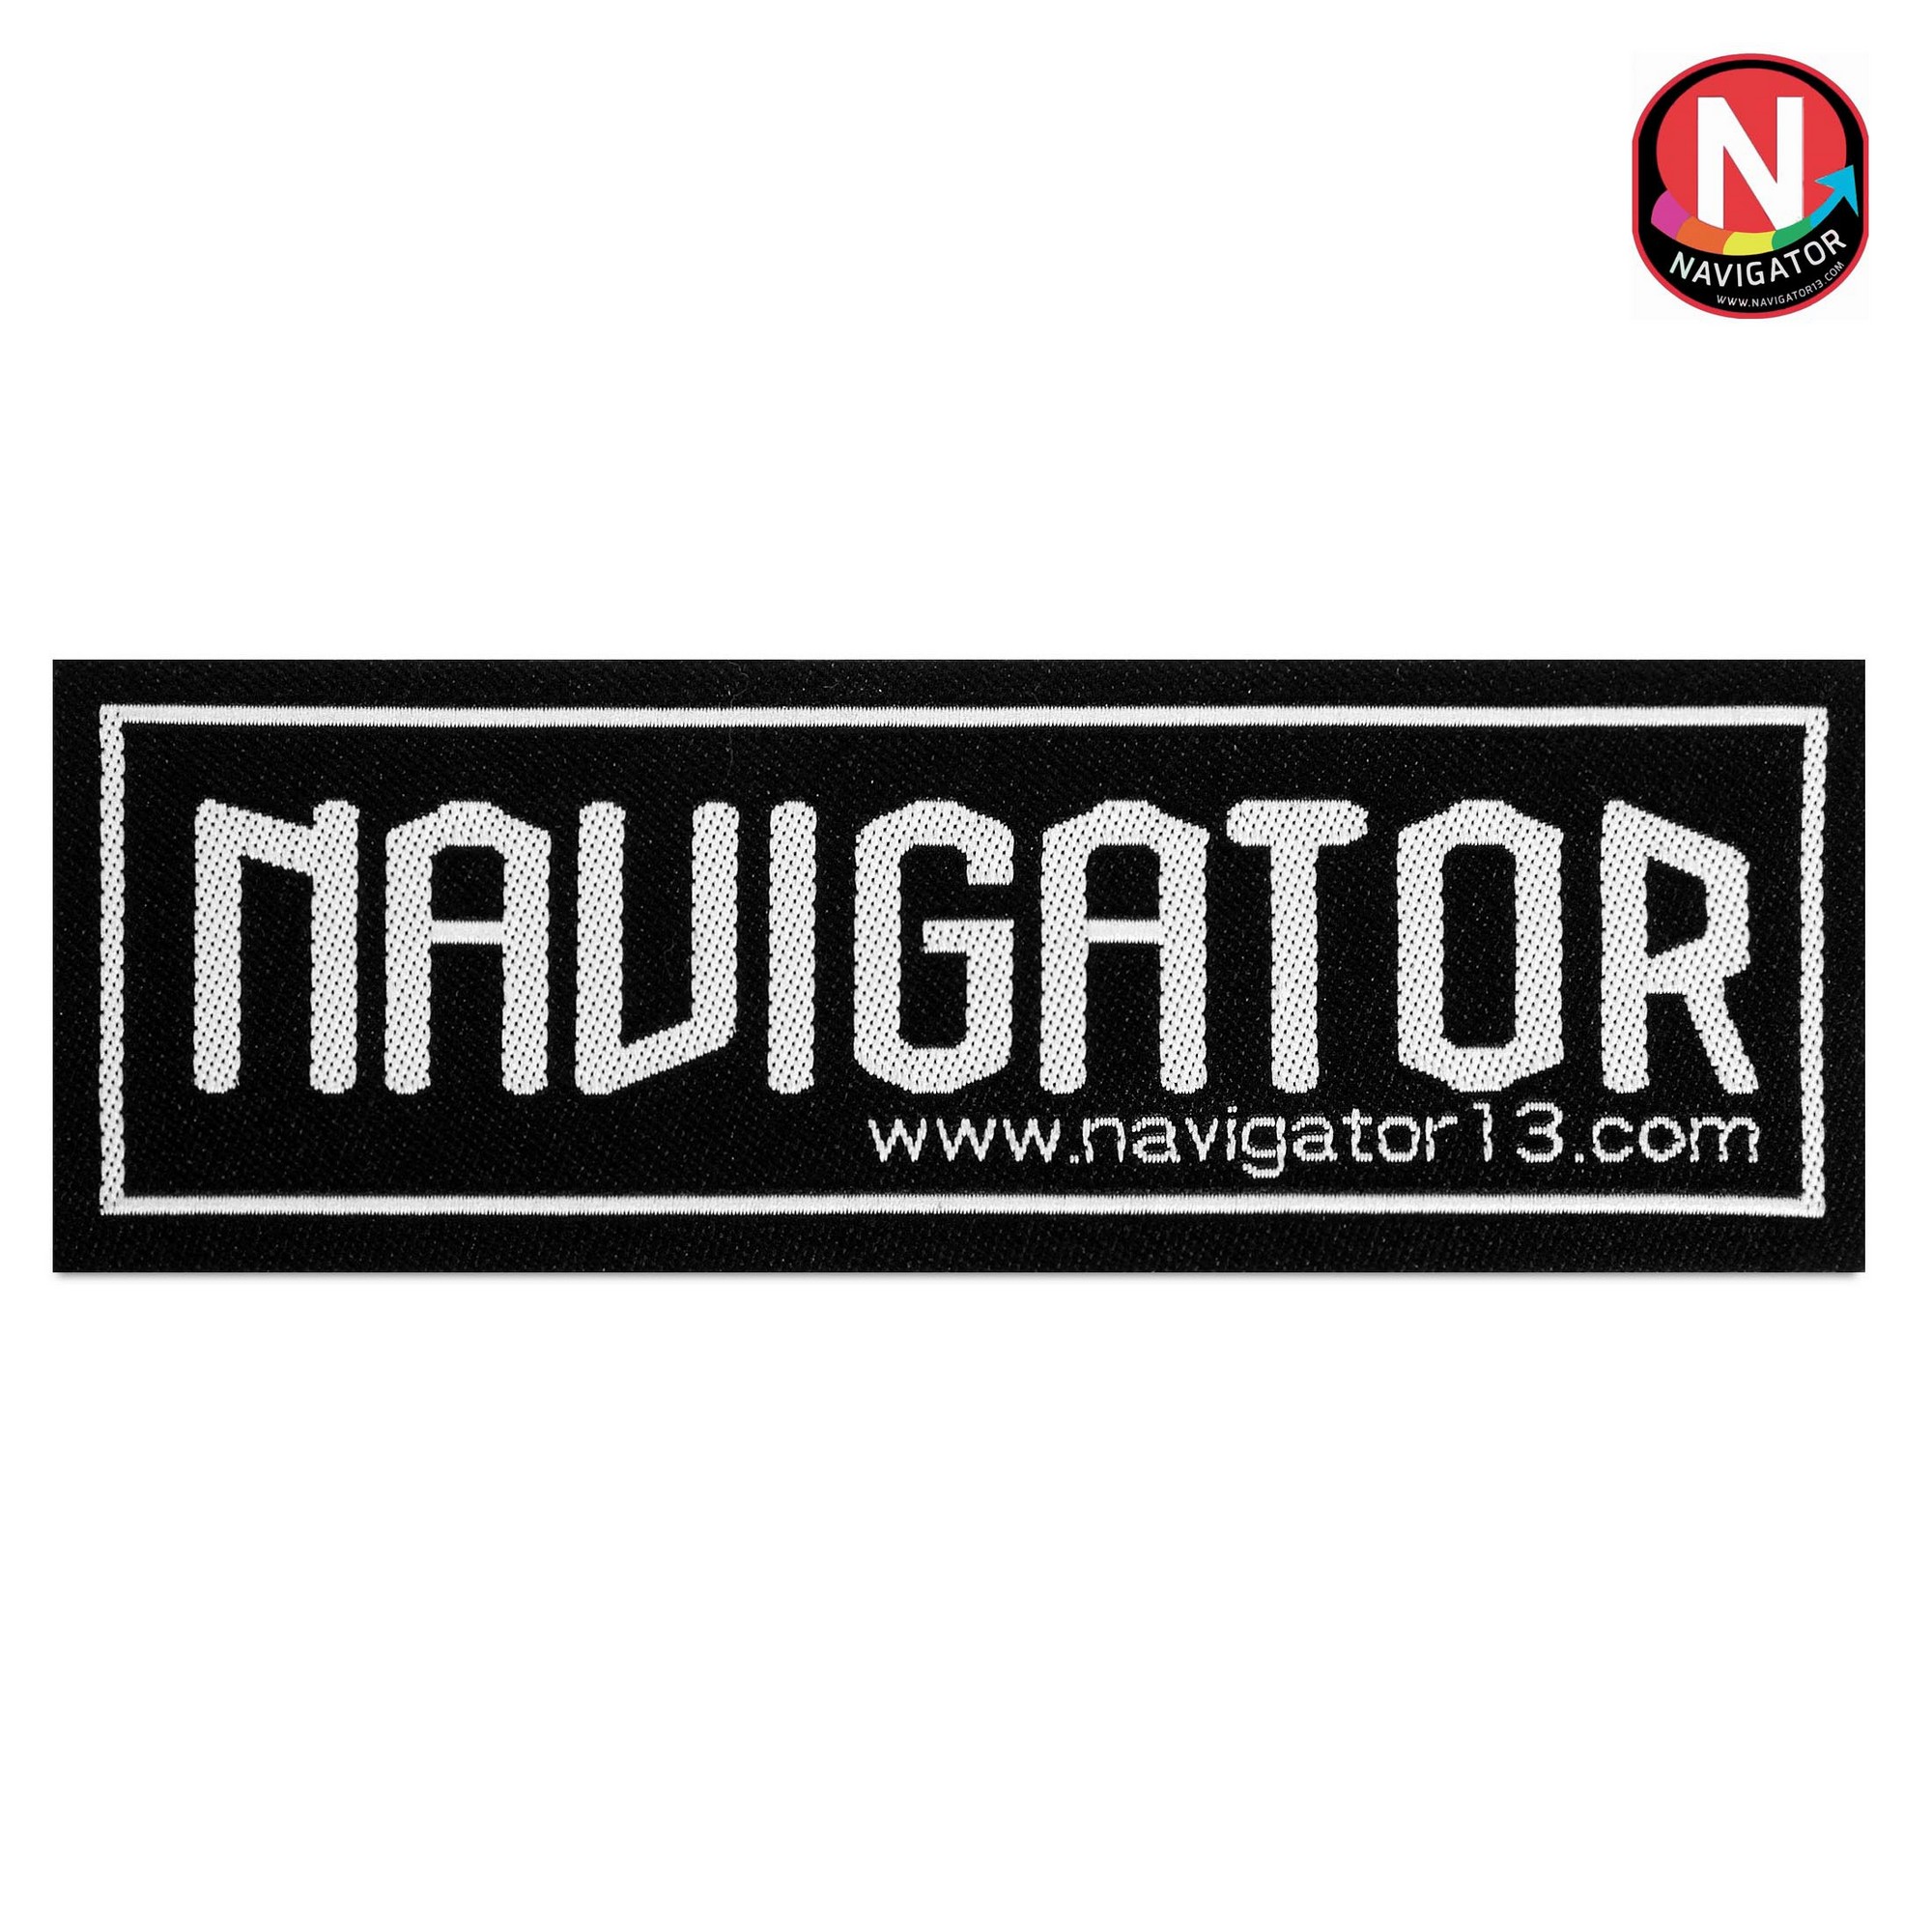  Navigator Pro 9635  